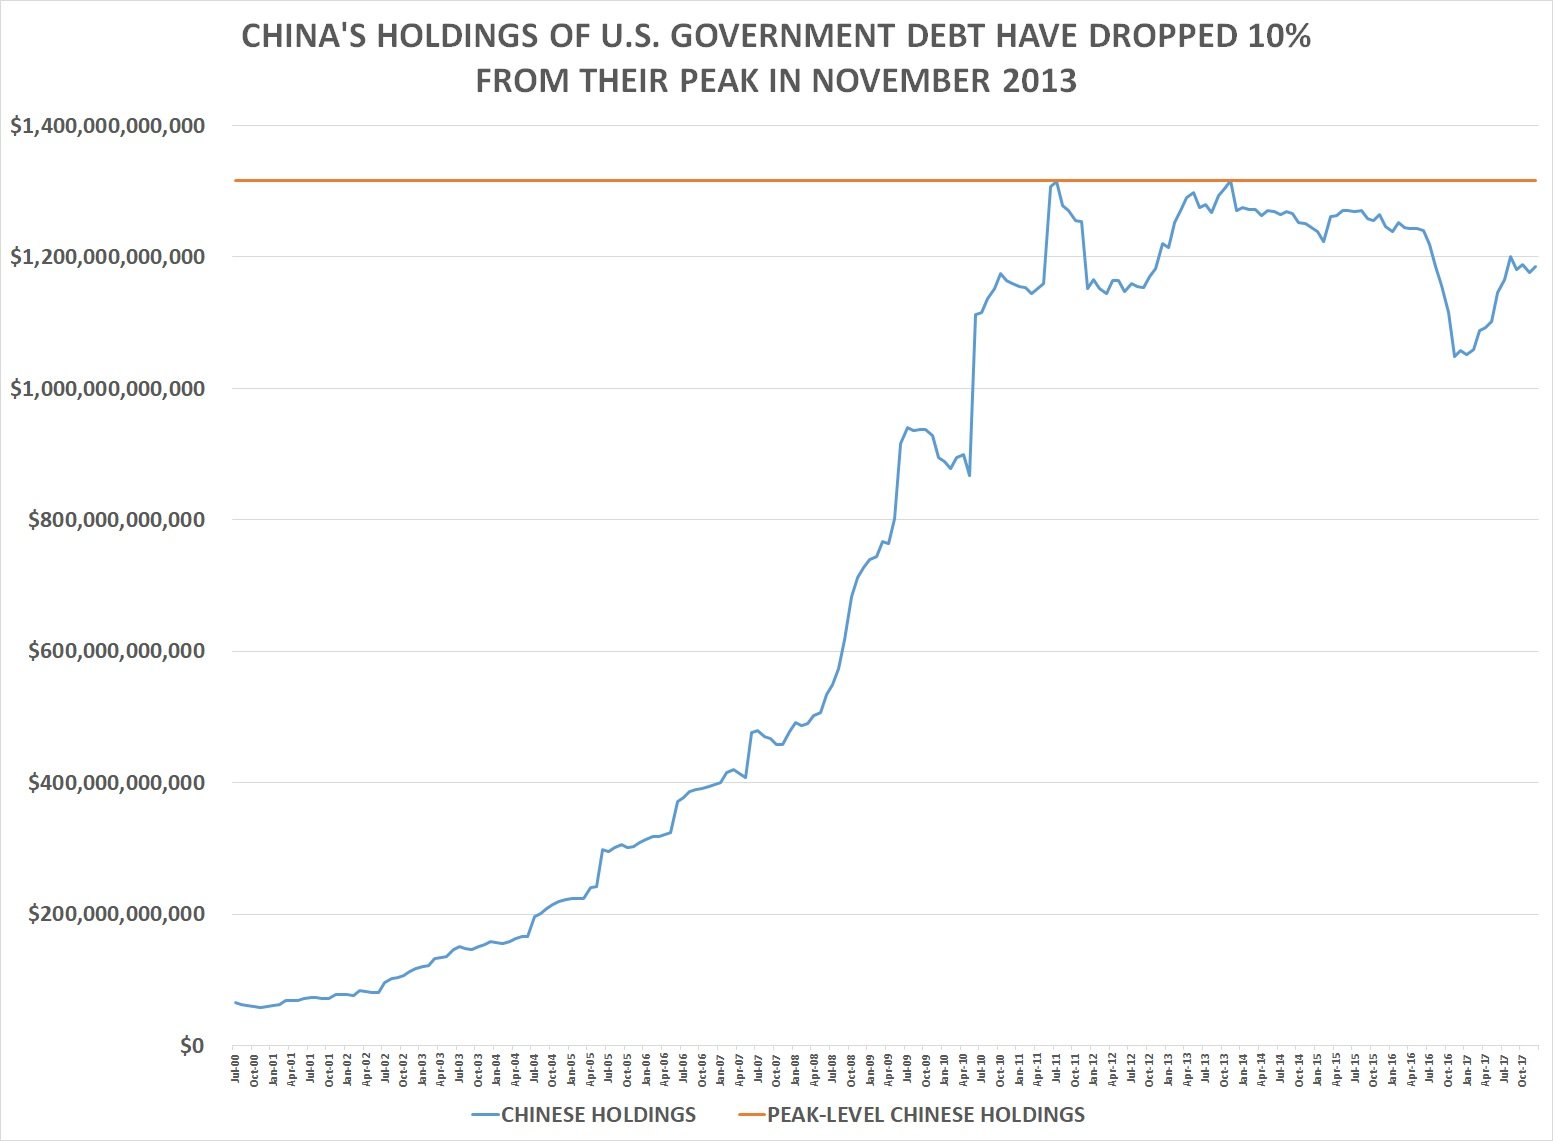 Chinas Holdings of U.S. Debt Down 10%